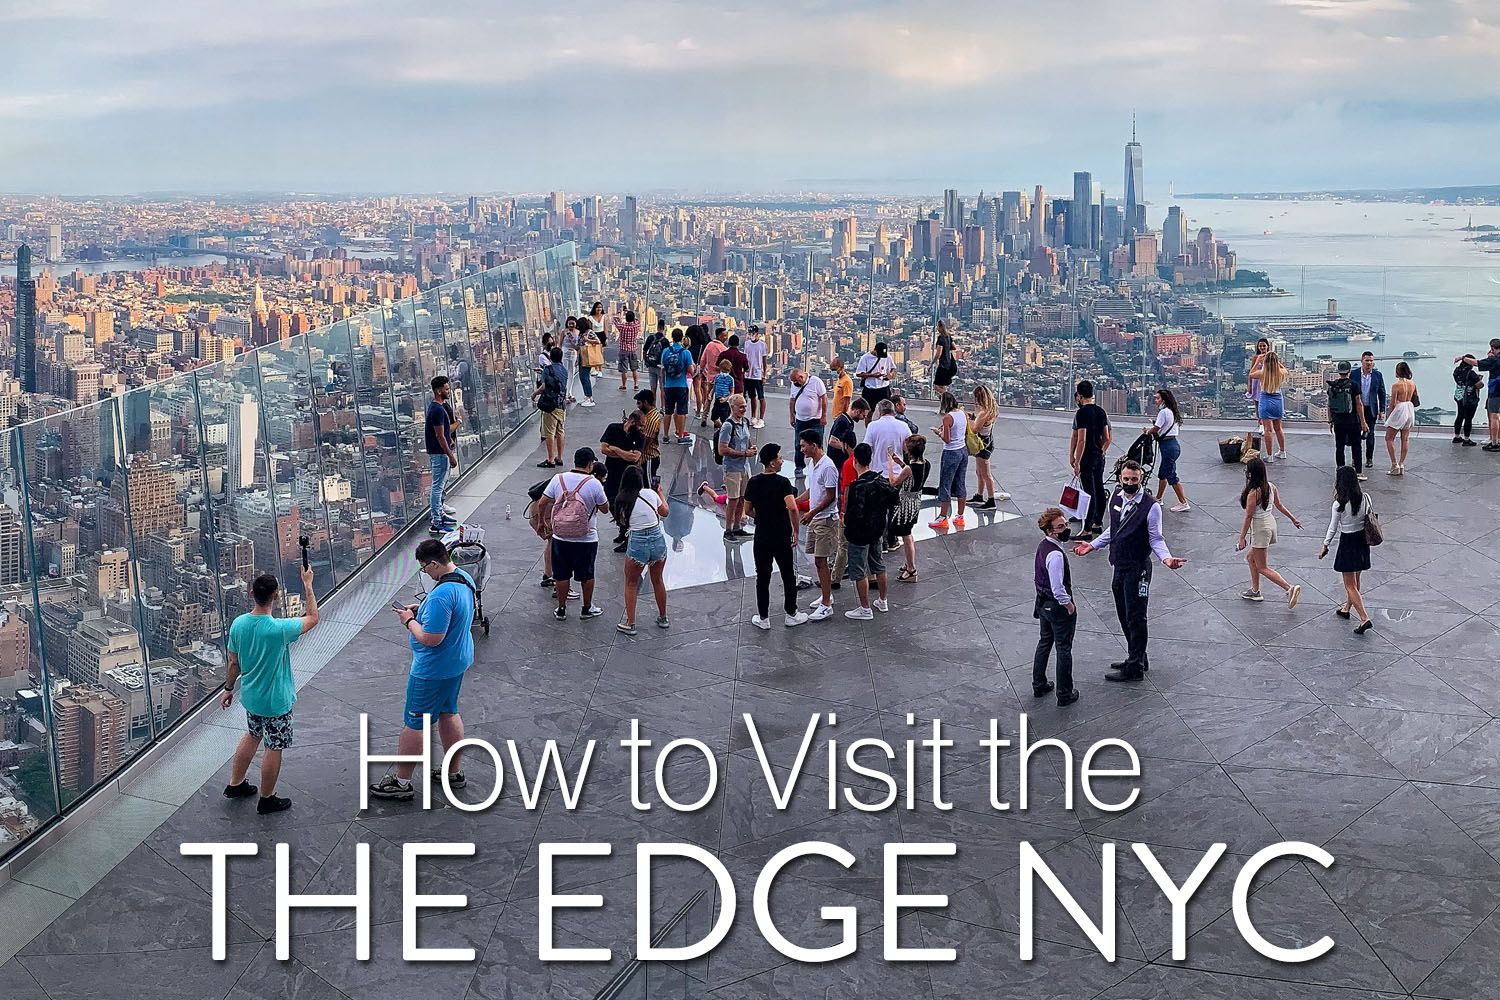 The Edge NYC